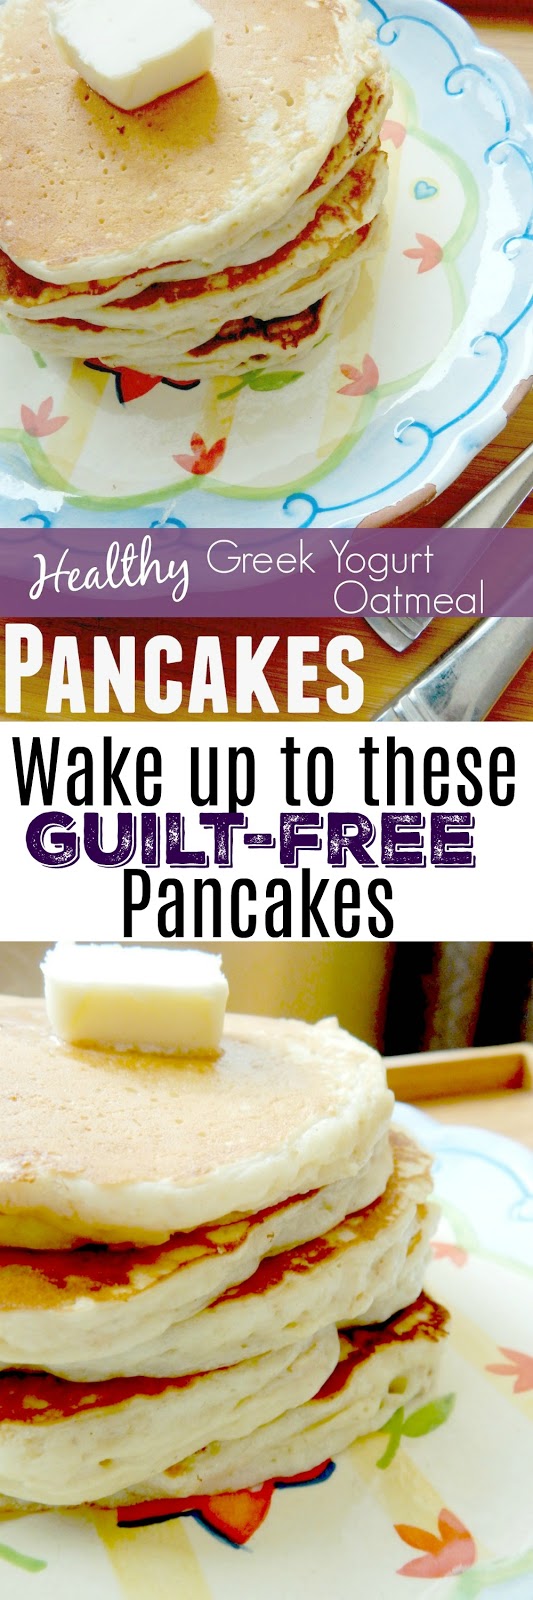 Healthy Greek Yogurt Oatmeal Pancakes | Ally's Sweet & Savory Eats